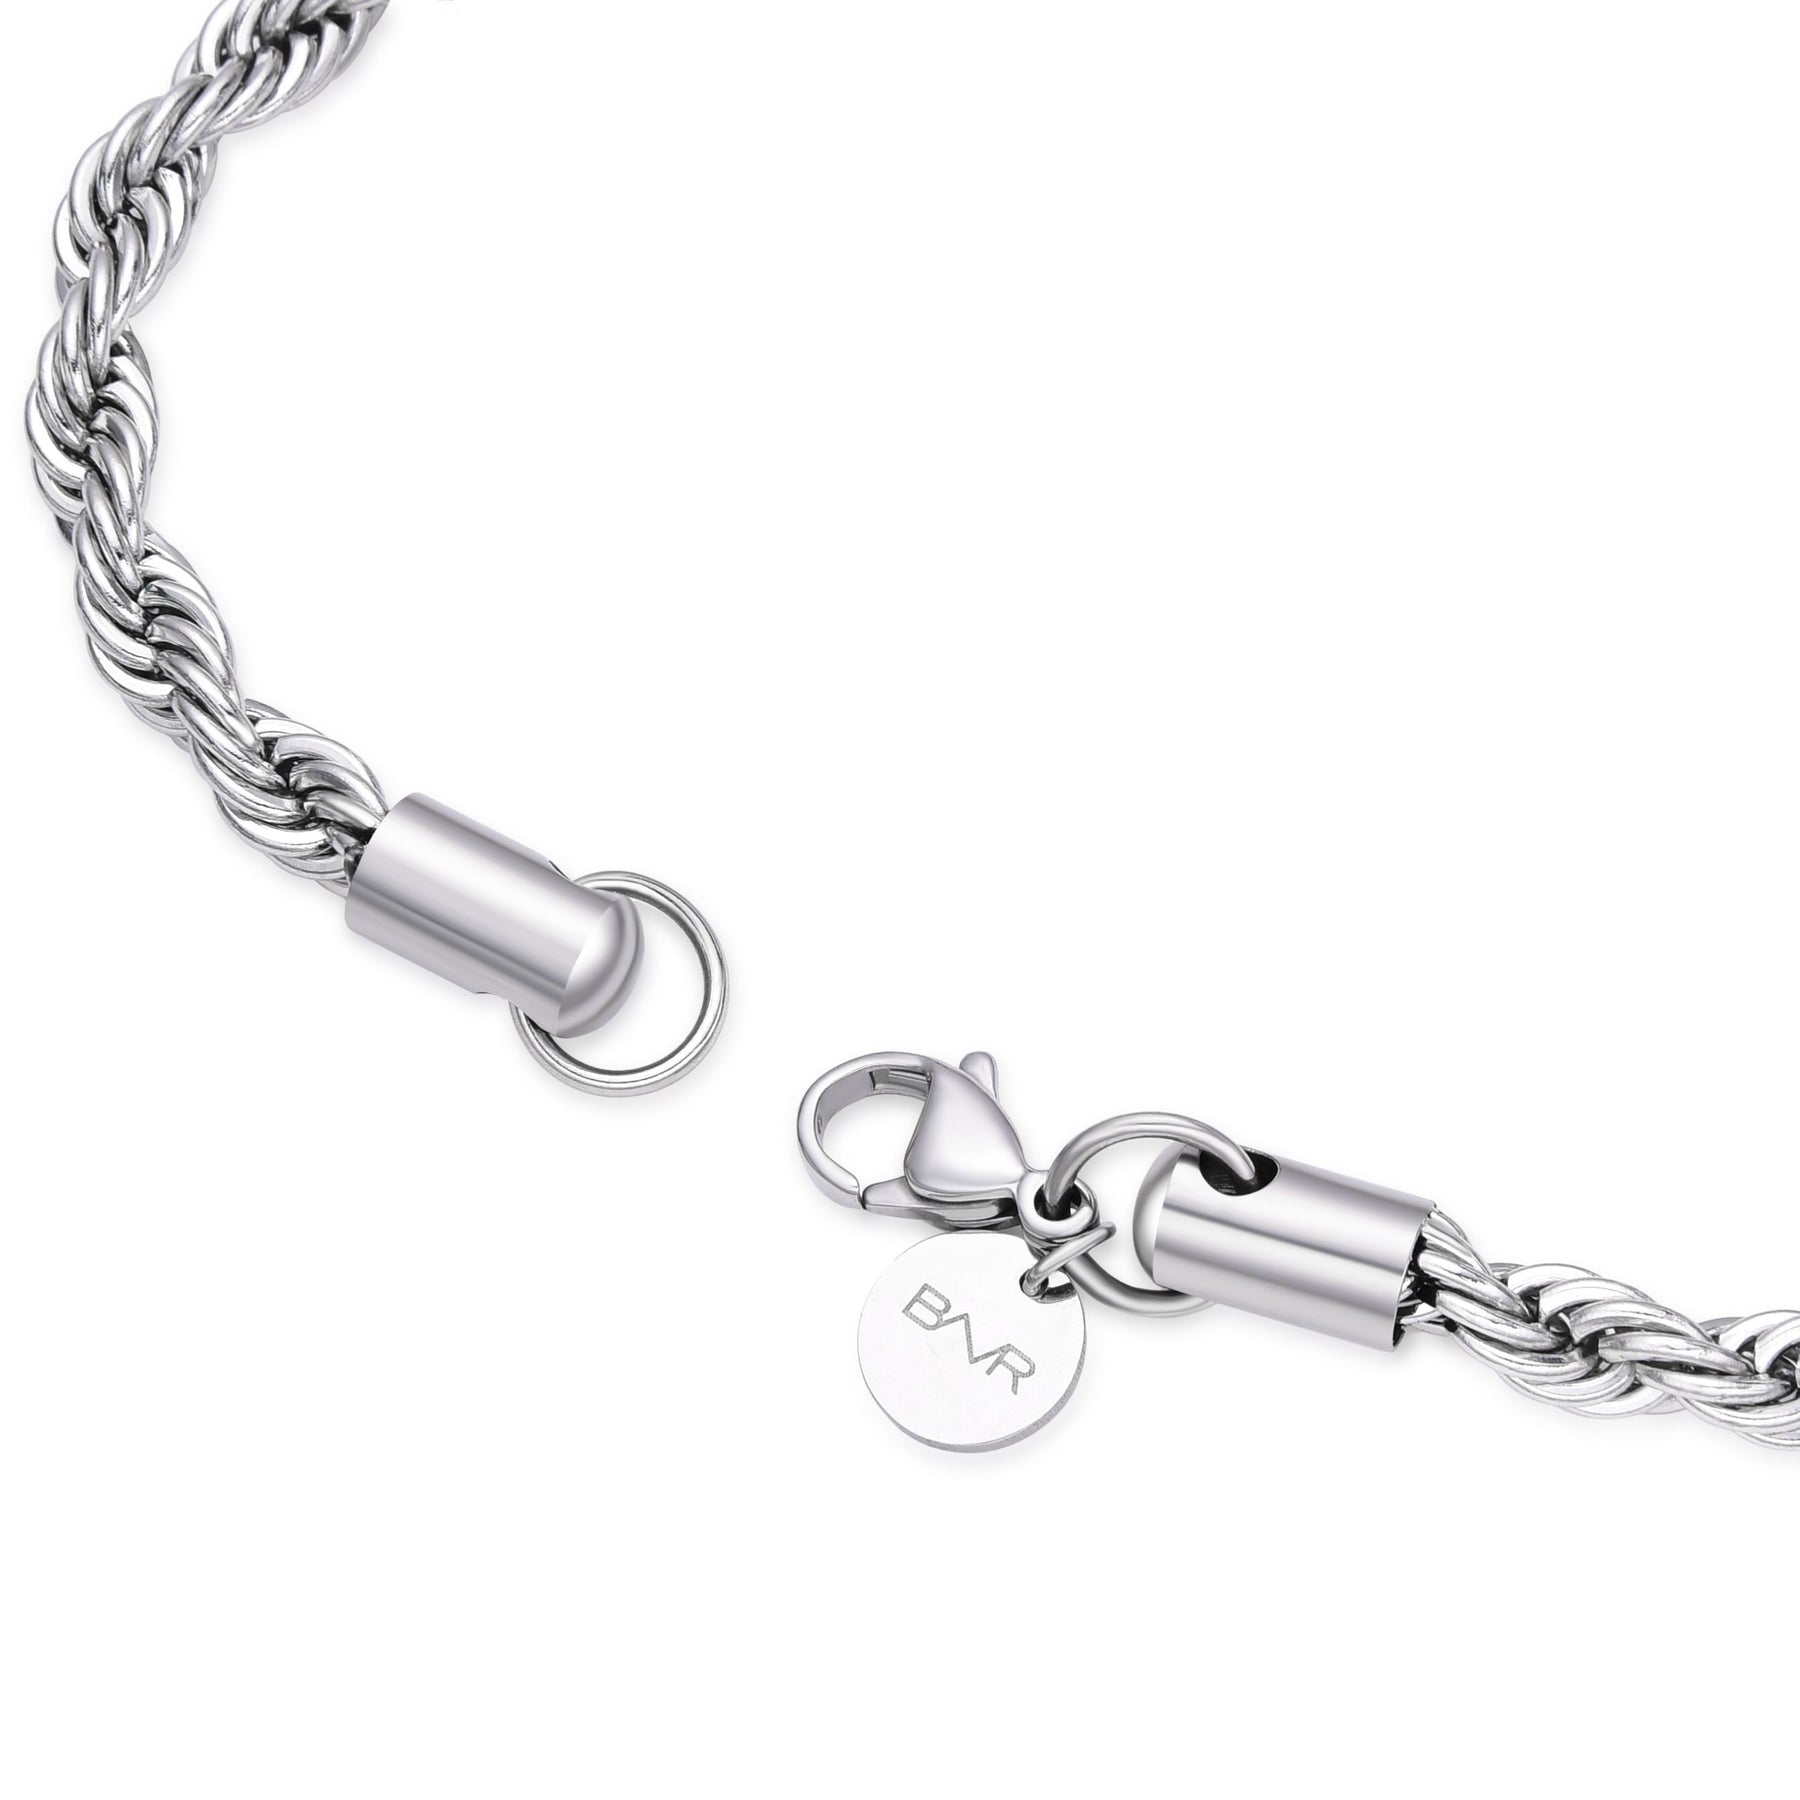 Rope Bracelet (Silver) 5mm